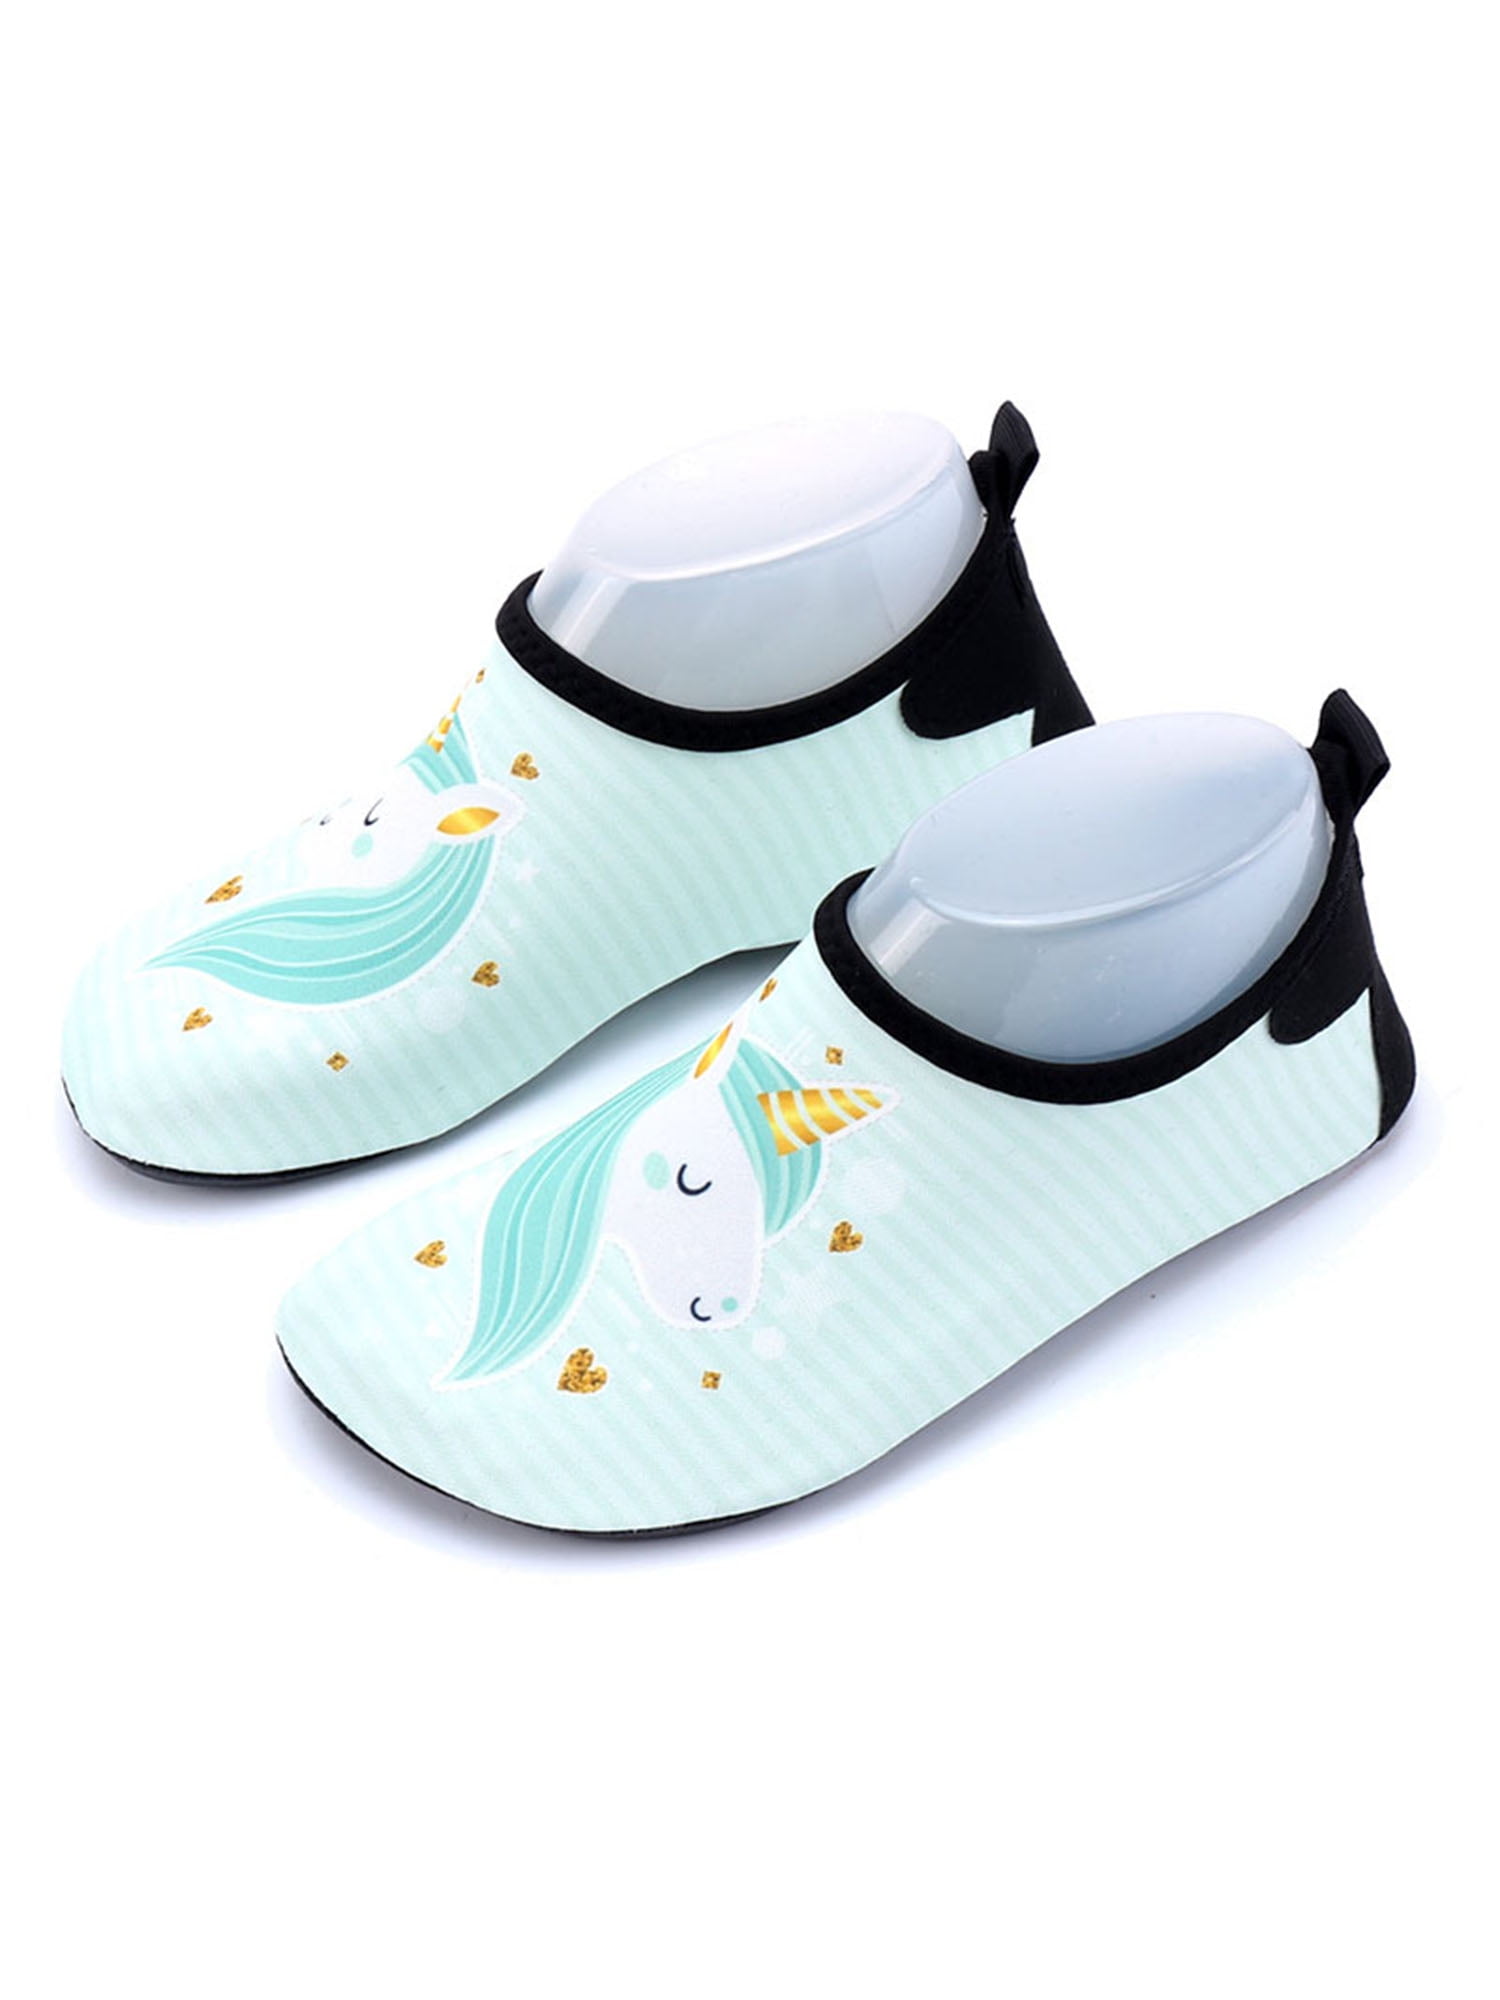 Kids Baby Child Water Shoes Aqua Socks Diving Rock Pool Beach Shoes Swim shoes 